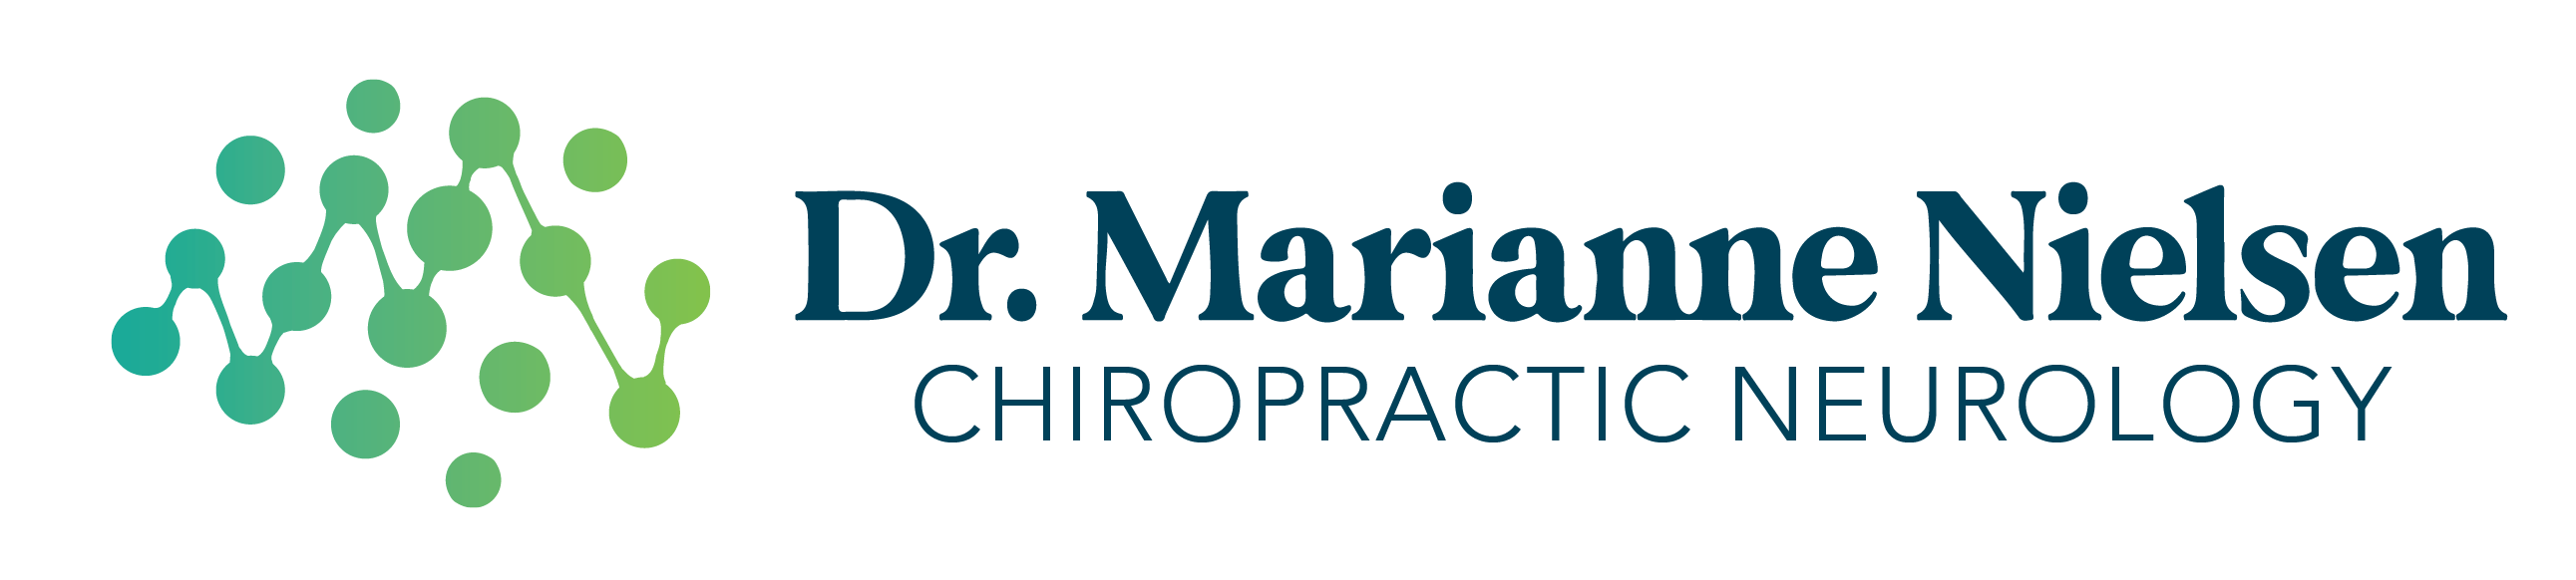 Marianne Nielsen Chiropractic Neurology